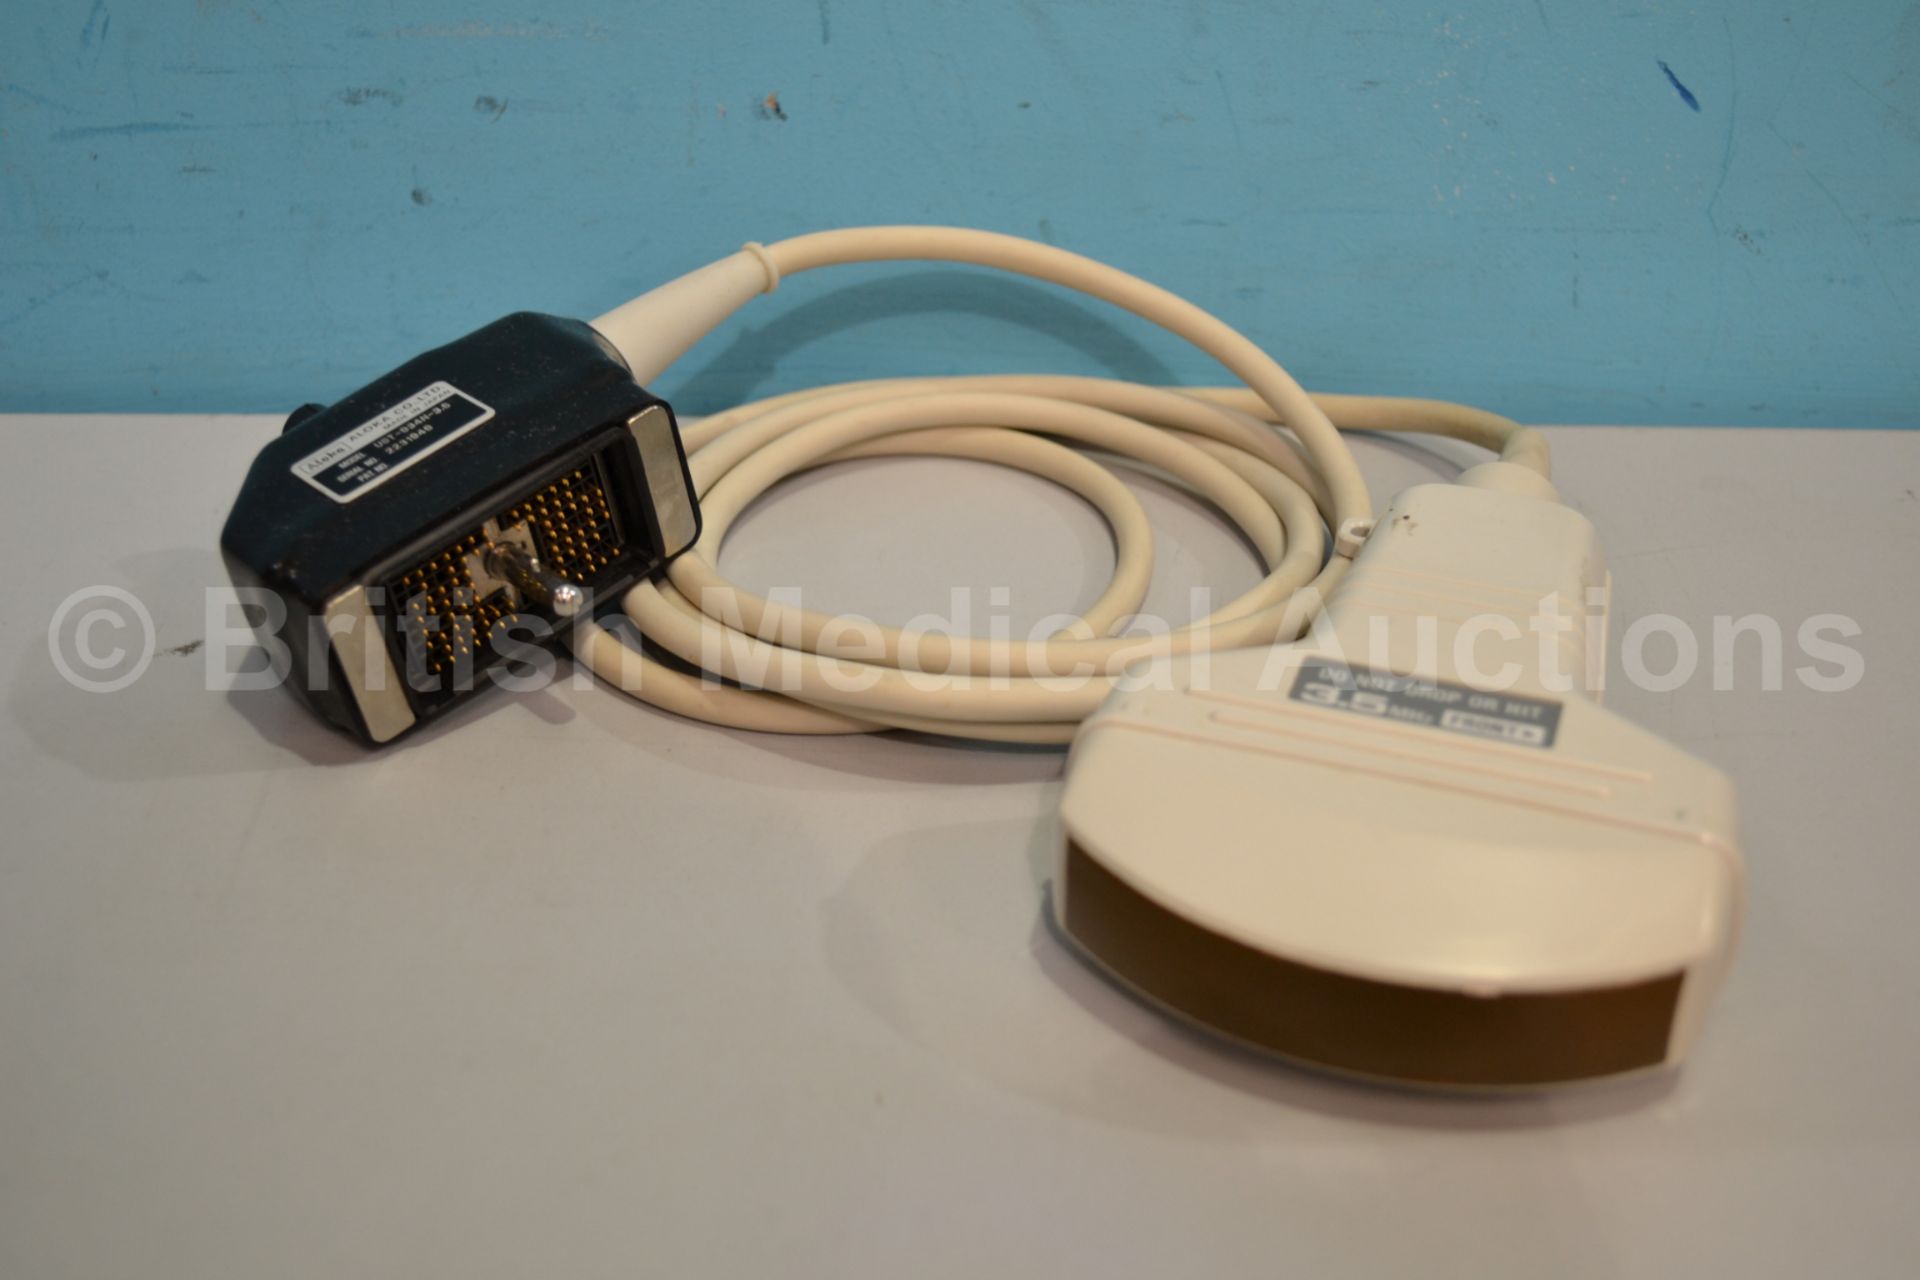 Aloka Ultrasound Transducer - UST-934N 3.5mhz